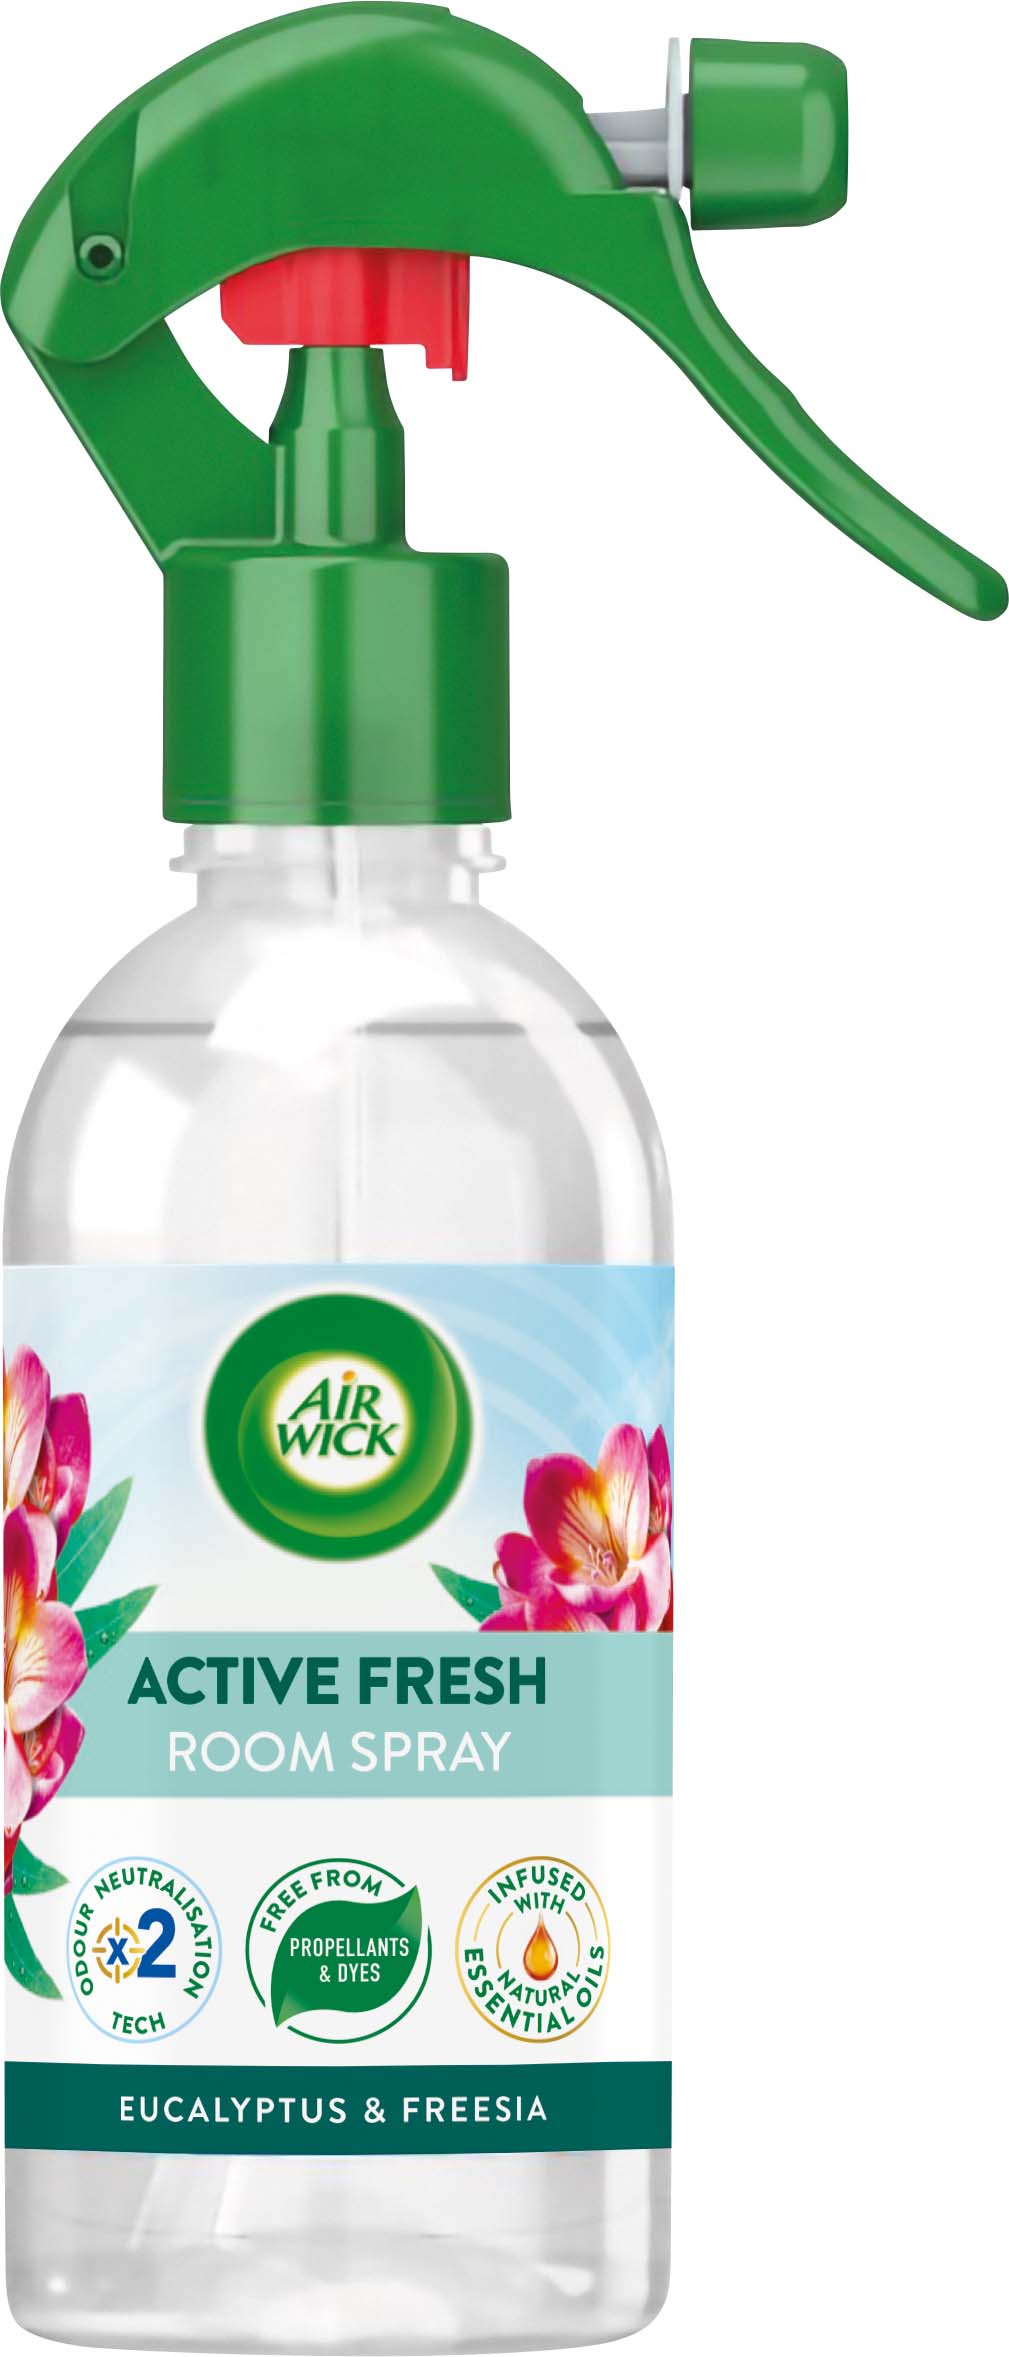 Air Wick 24/7 Active Fresh Fresh Cotton Refill for automatic air freshener  4x228ml 